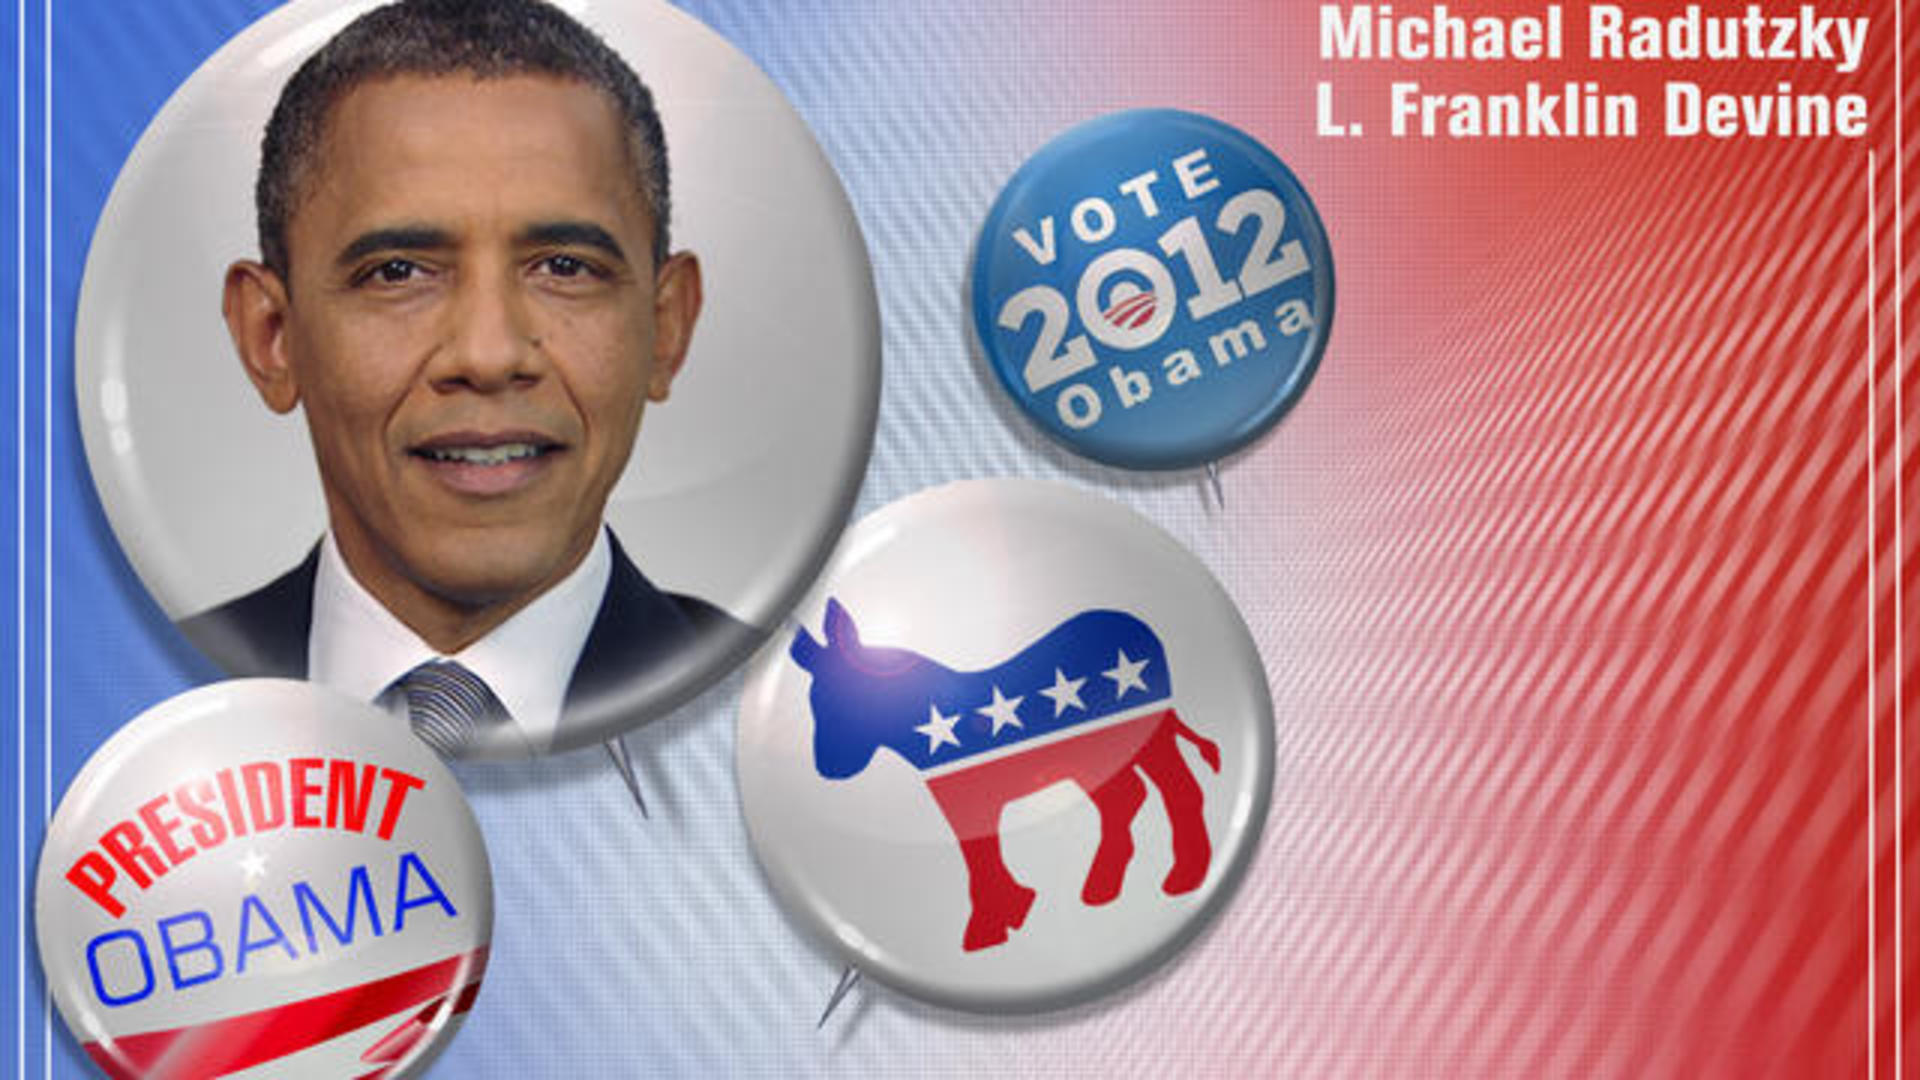 Barack Obama political campaign button pin 2012 Grateful Dead Dead Heads